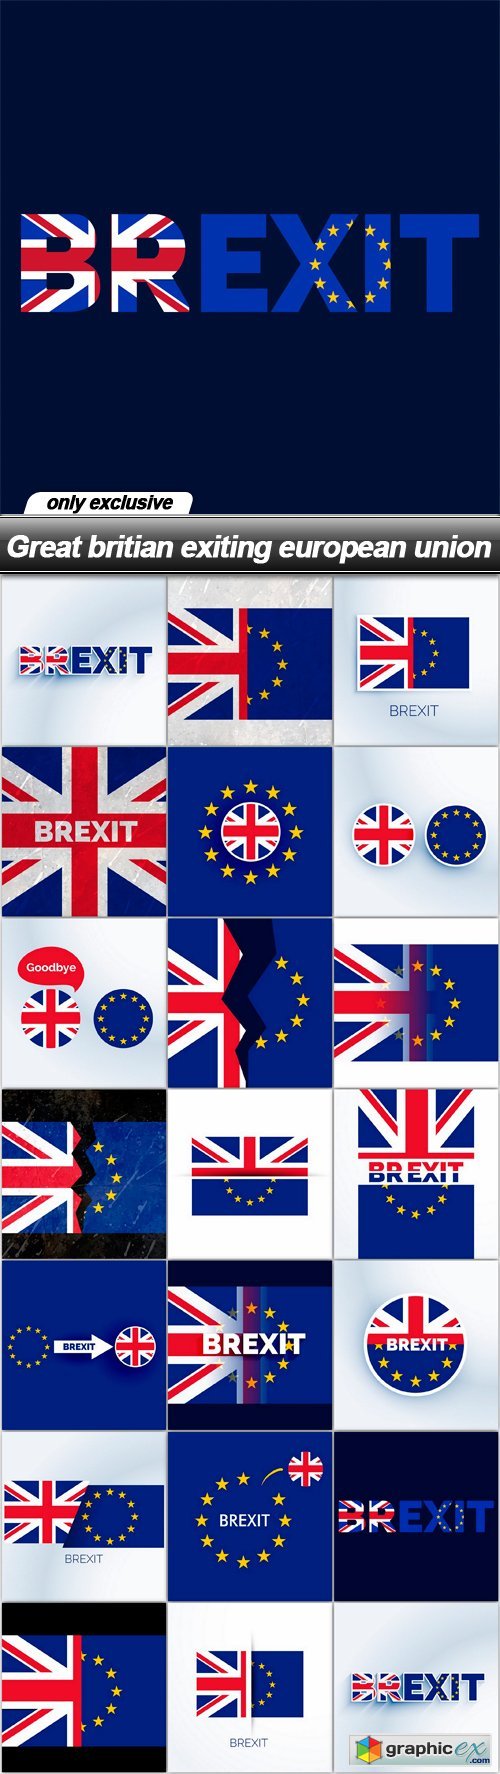 Great britian exiting european union, Brexit - 20 EPS